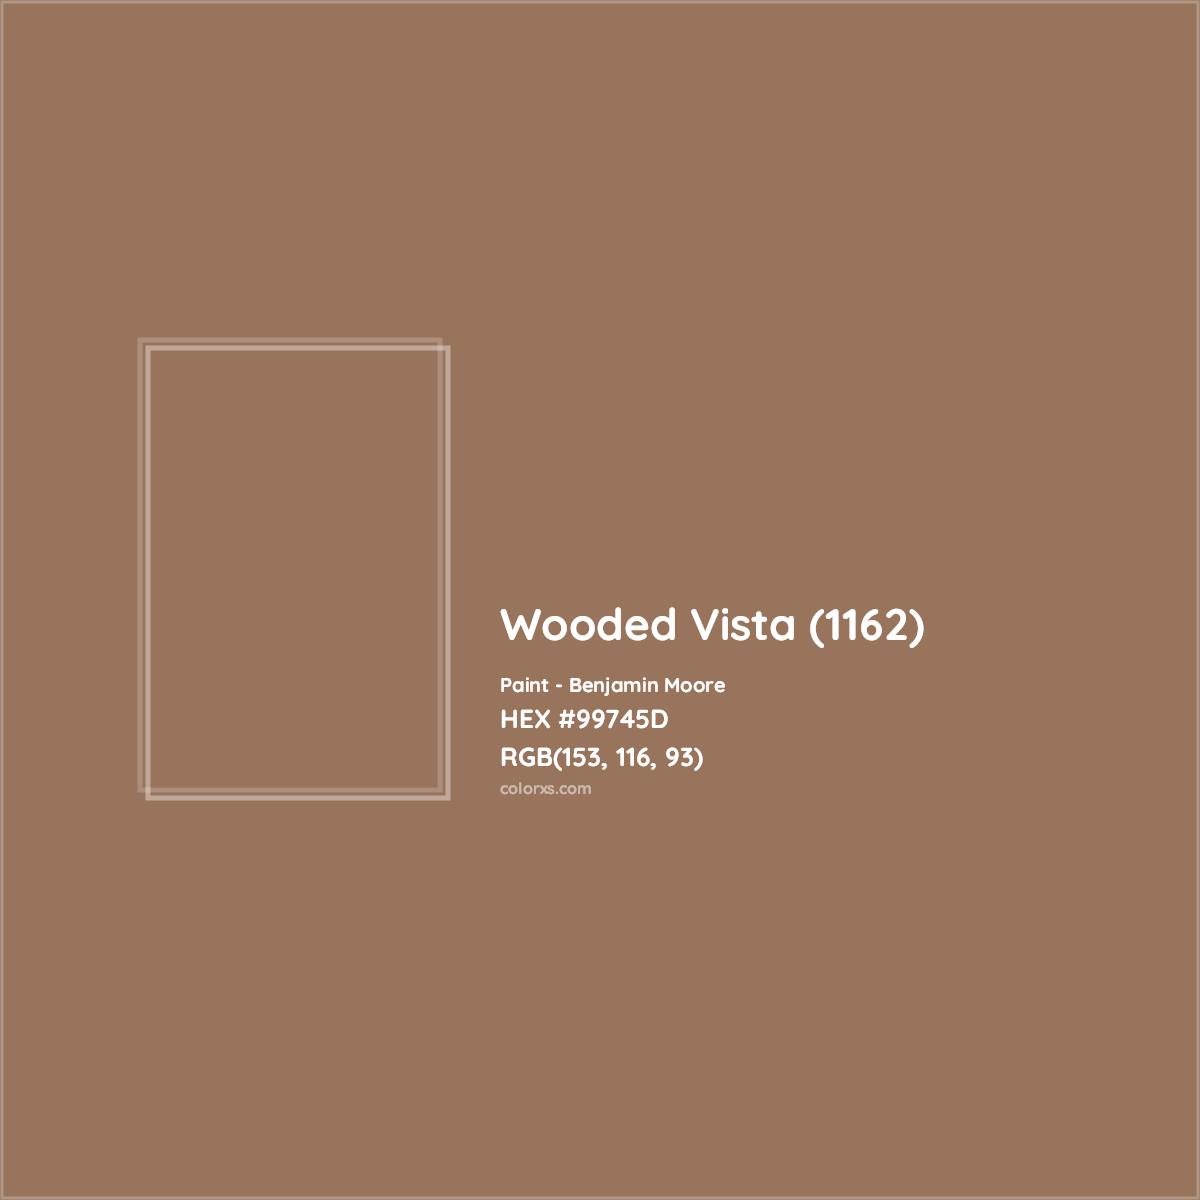 HEX #99745D Wooded Vista (1162) Paint Benjamin Moore - Color Code